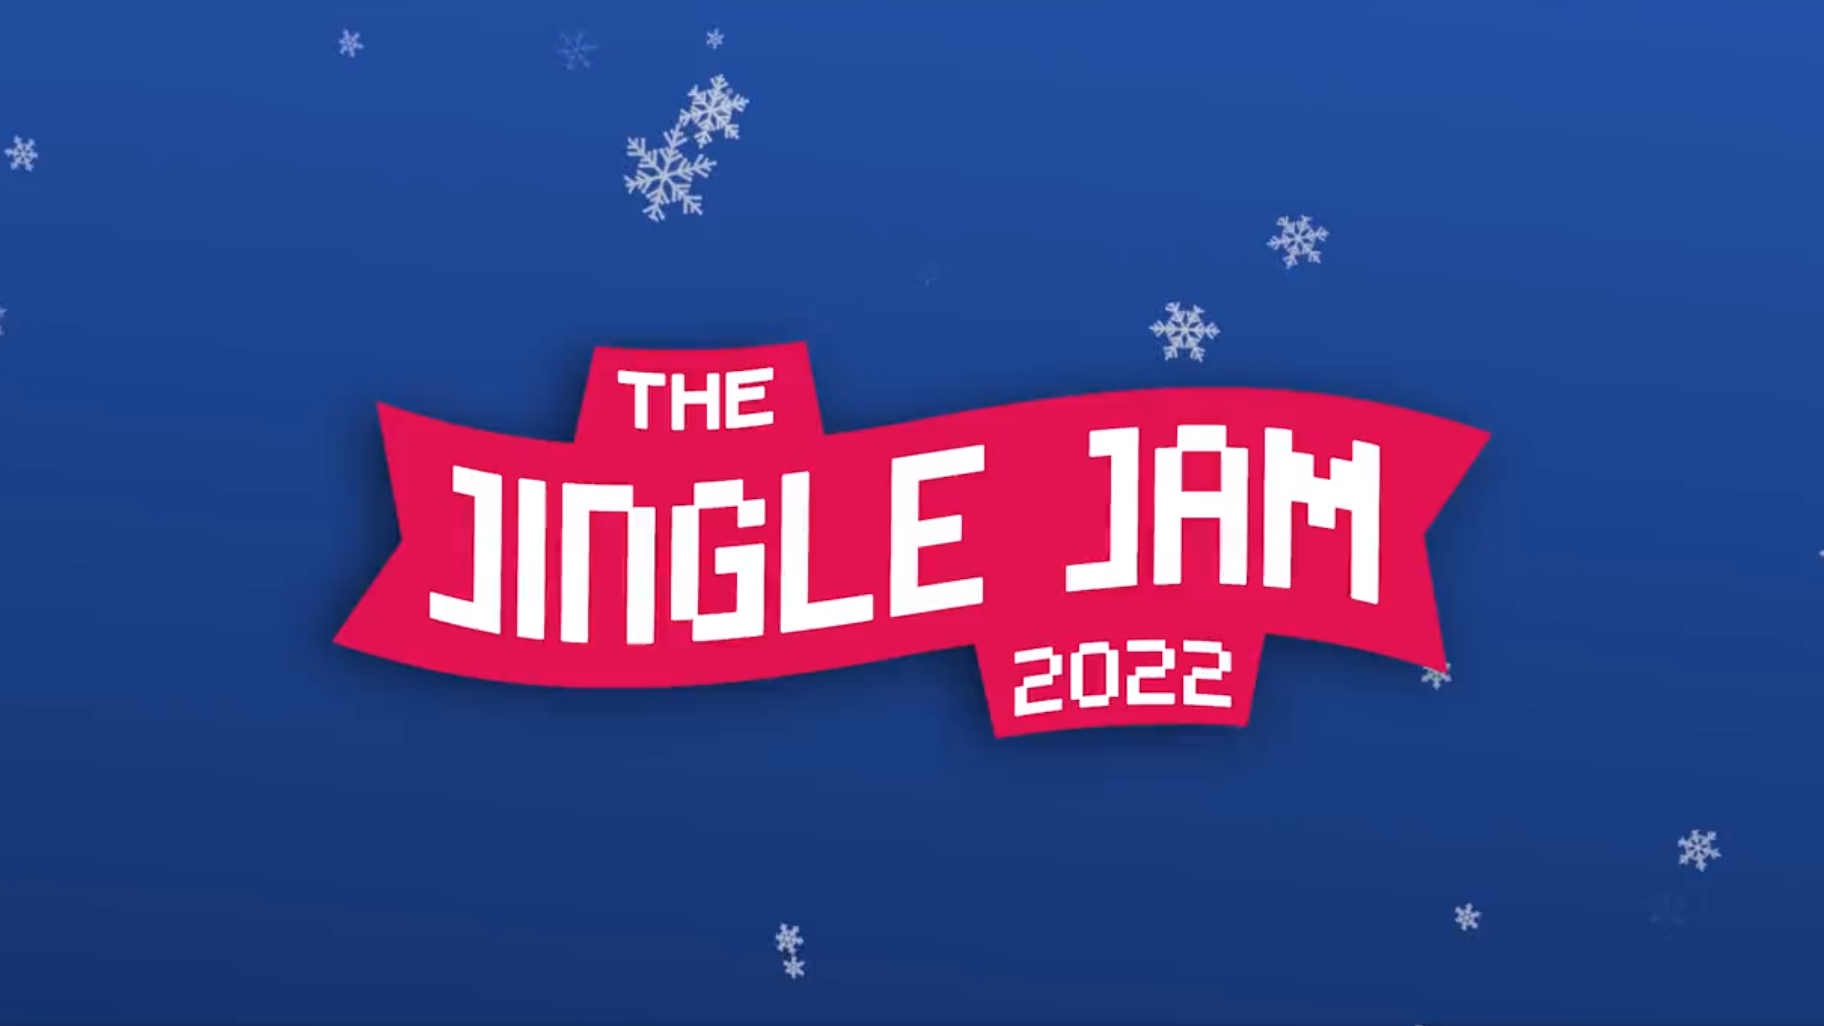 Yogscast Jingle Jam charity stream reaches impressive donation milestone in first night - Dot